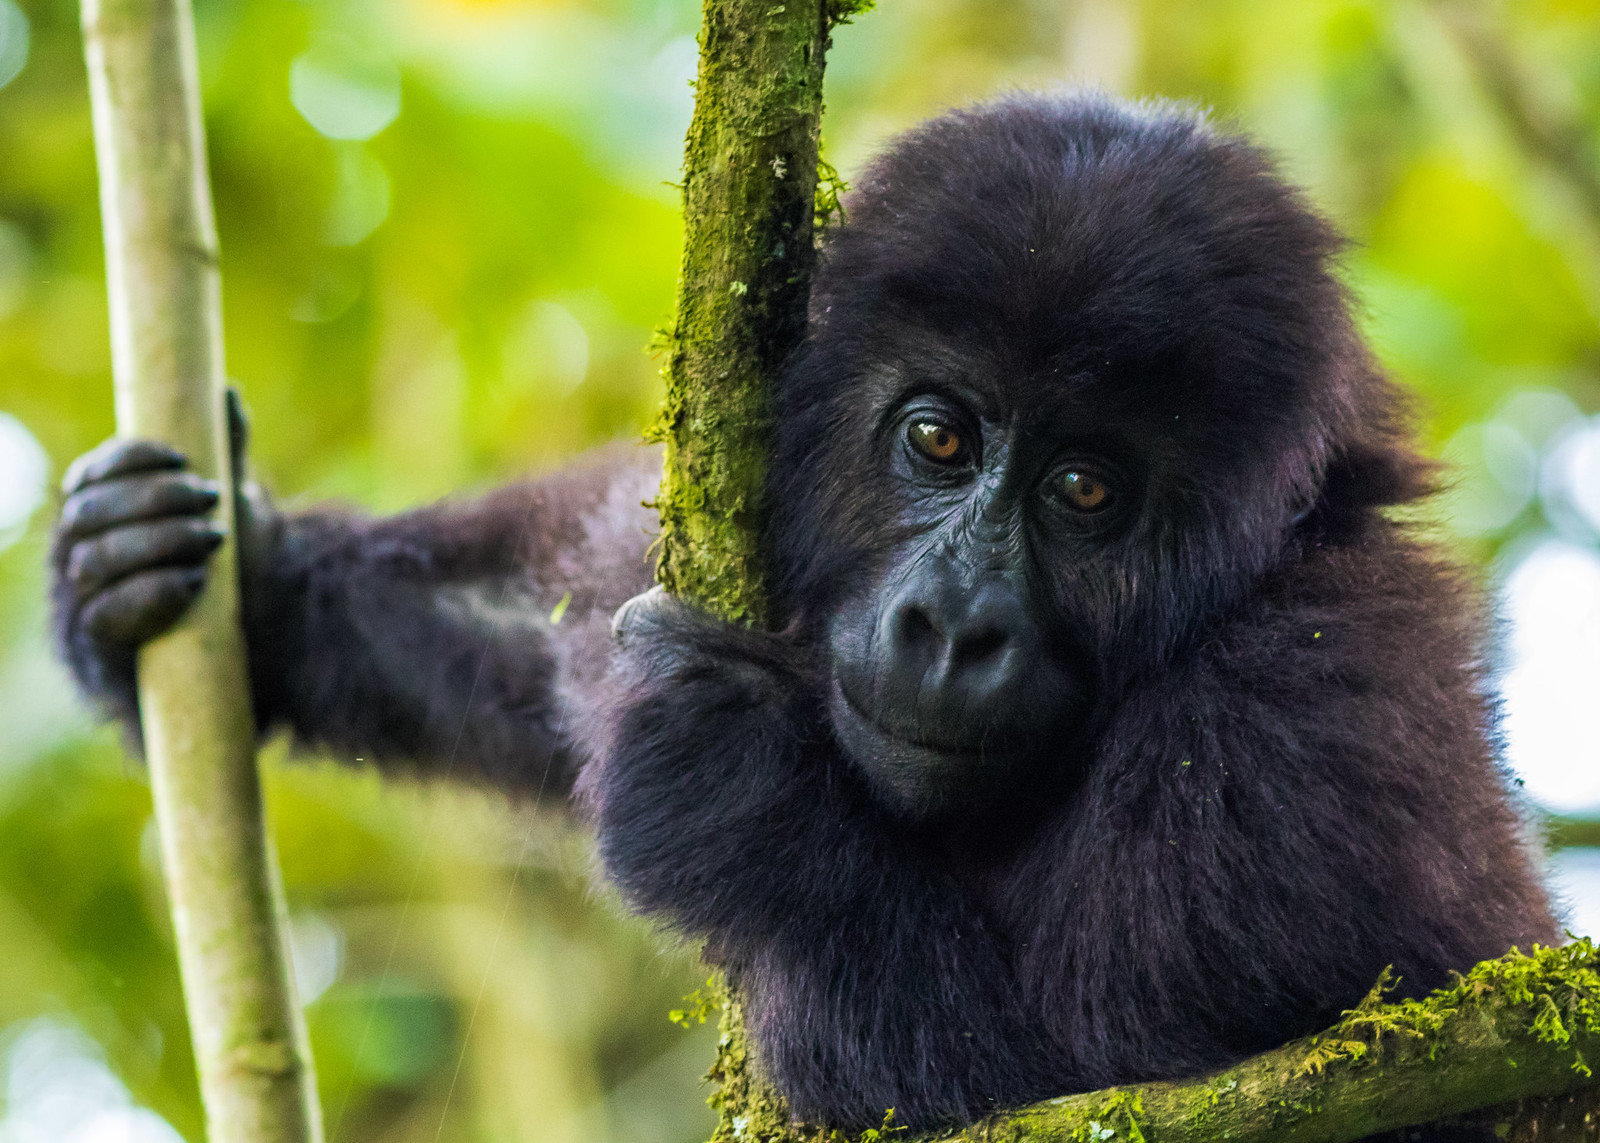 A young Grauer's gorilla (Gorilla beringei graueri) climbing and exploring in the trees in Kahuzi-Biega National Park, Democratic Republic of the Congo. Image Credit: Mike Davison, Flickr.